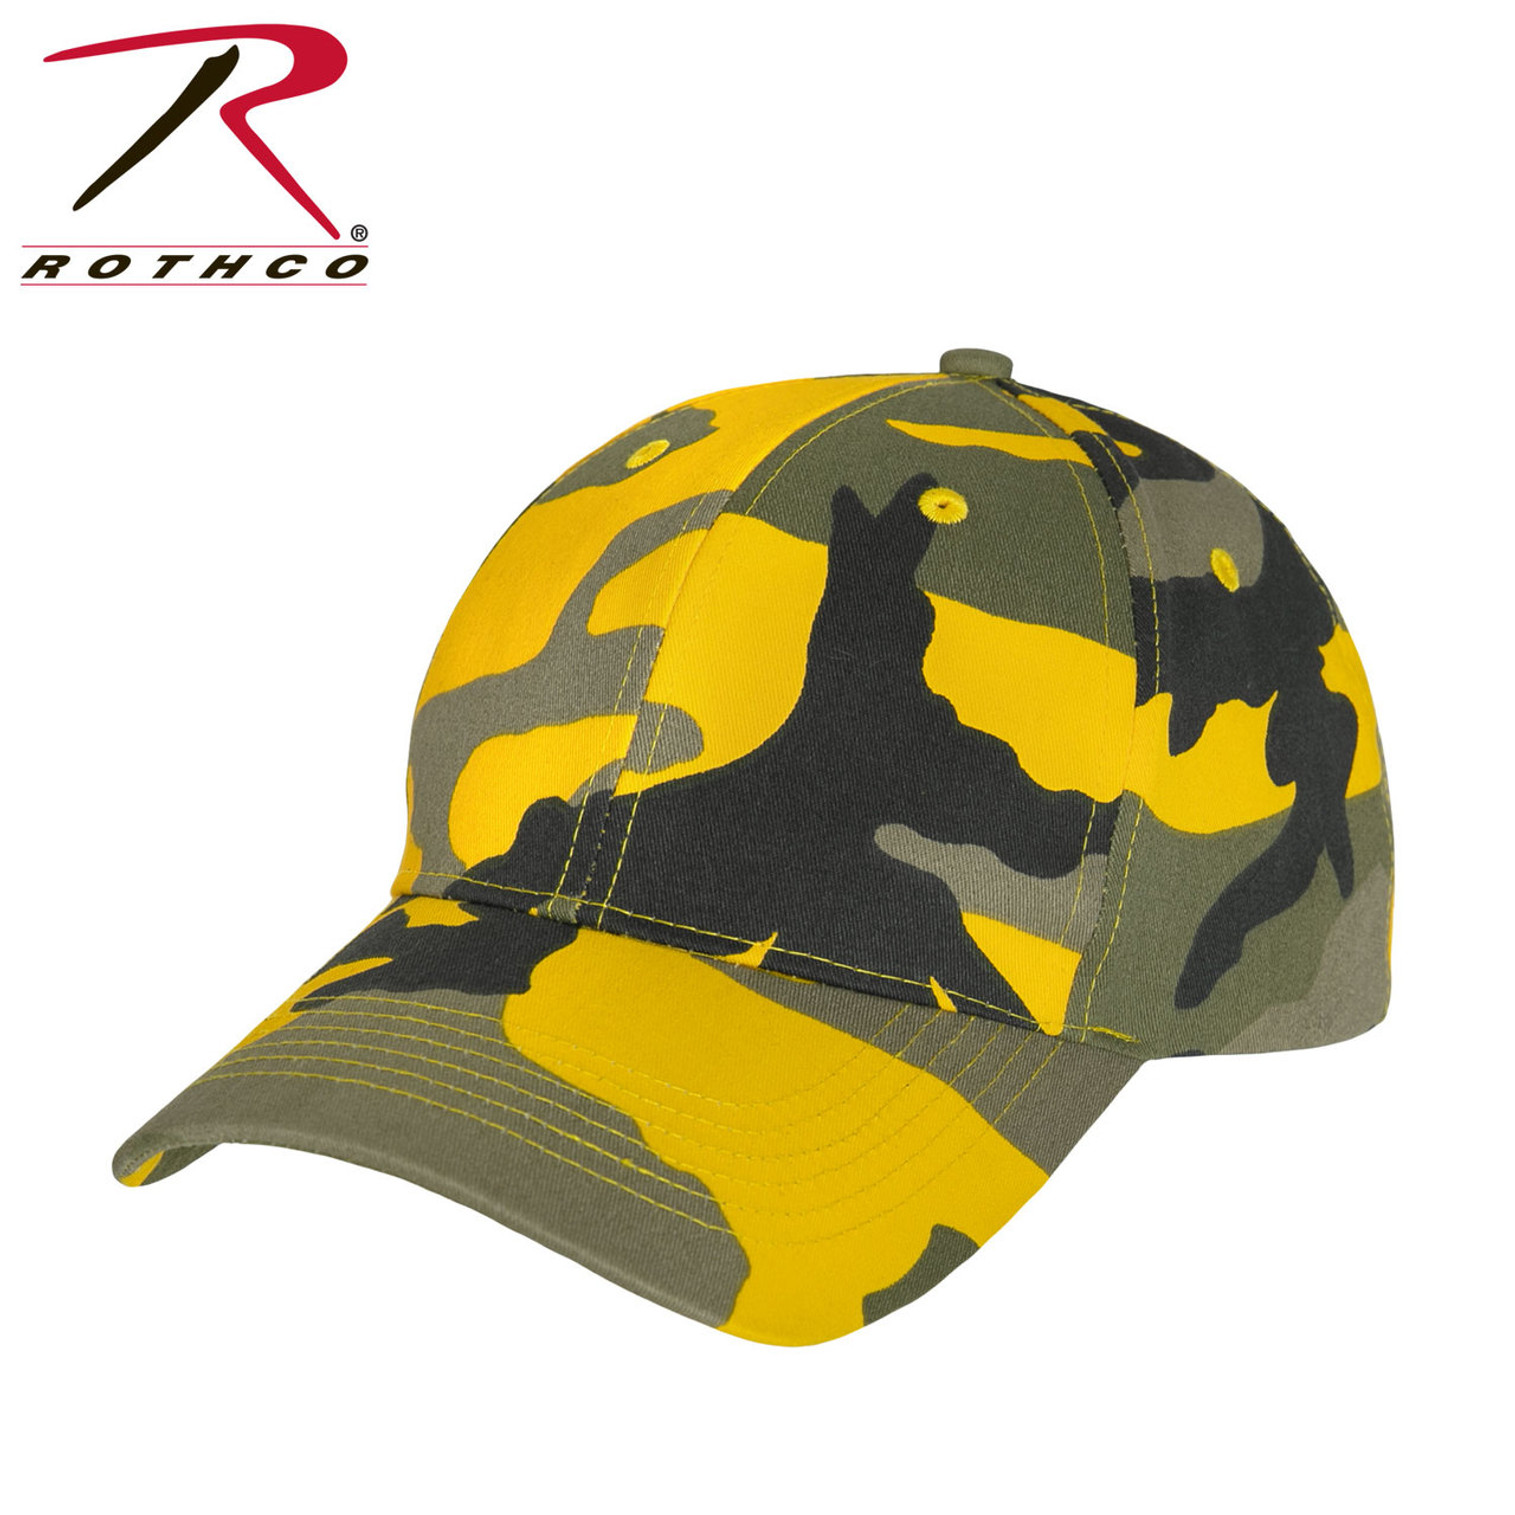 Rothco Color Camo Supreme Low Profile Cap - Stinger Yellow